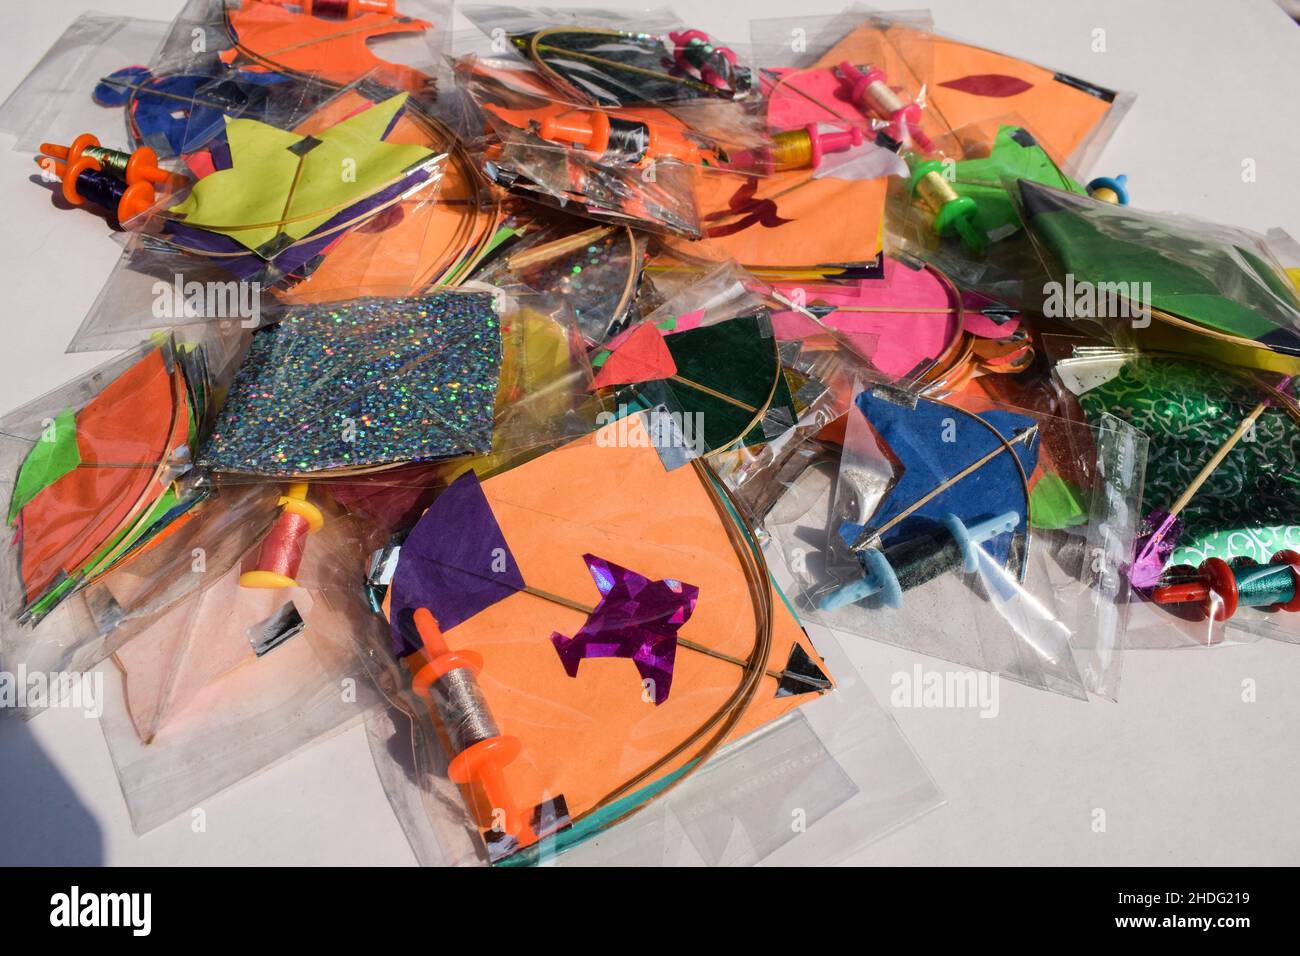 Kite shopping during Indian kite festival Makarsankranti or Uttarayan. Many kites in packets sold in India Stock Photo